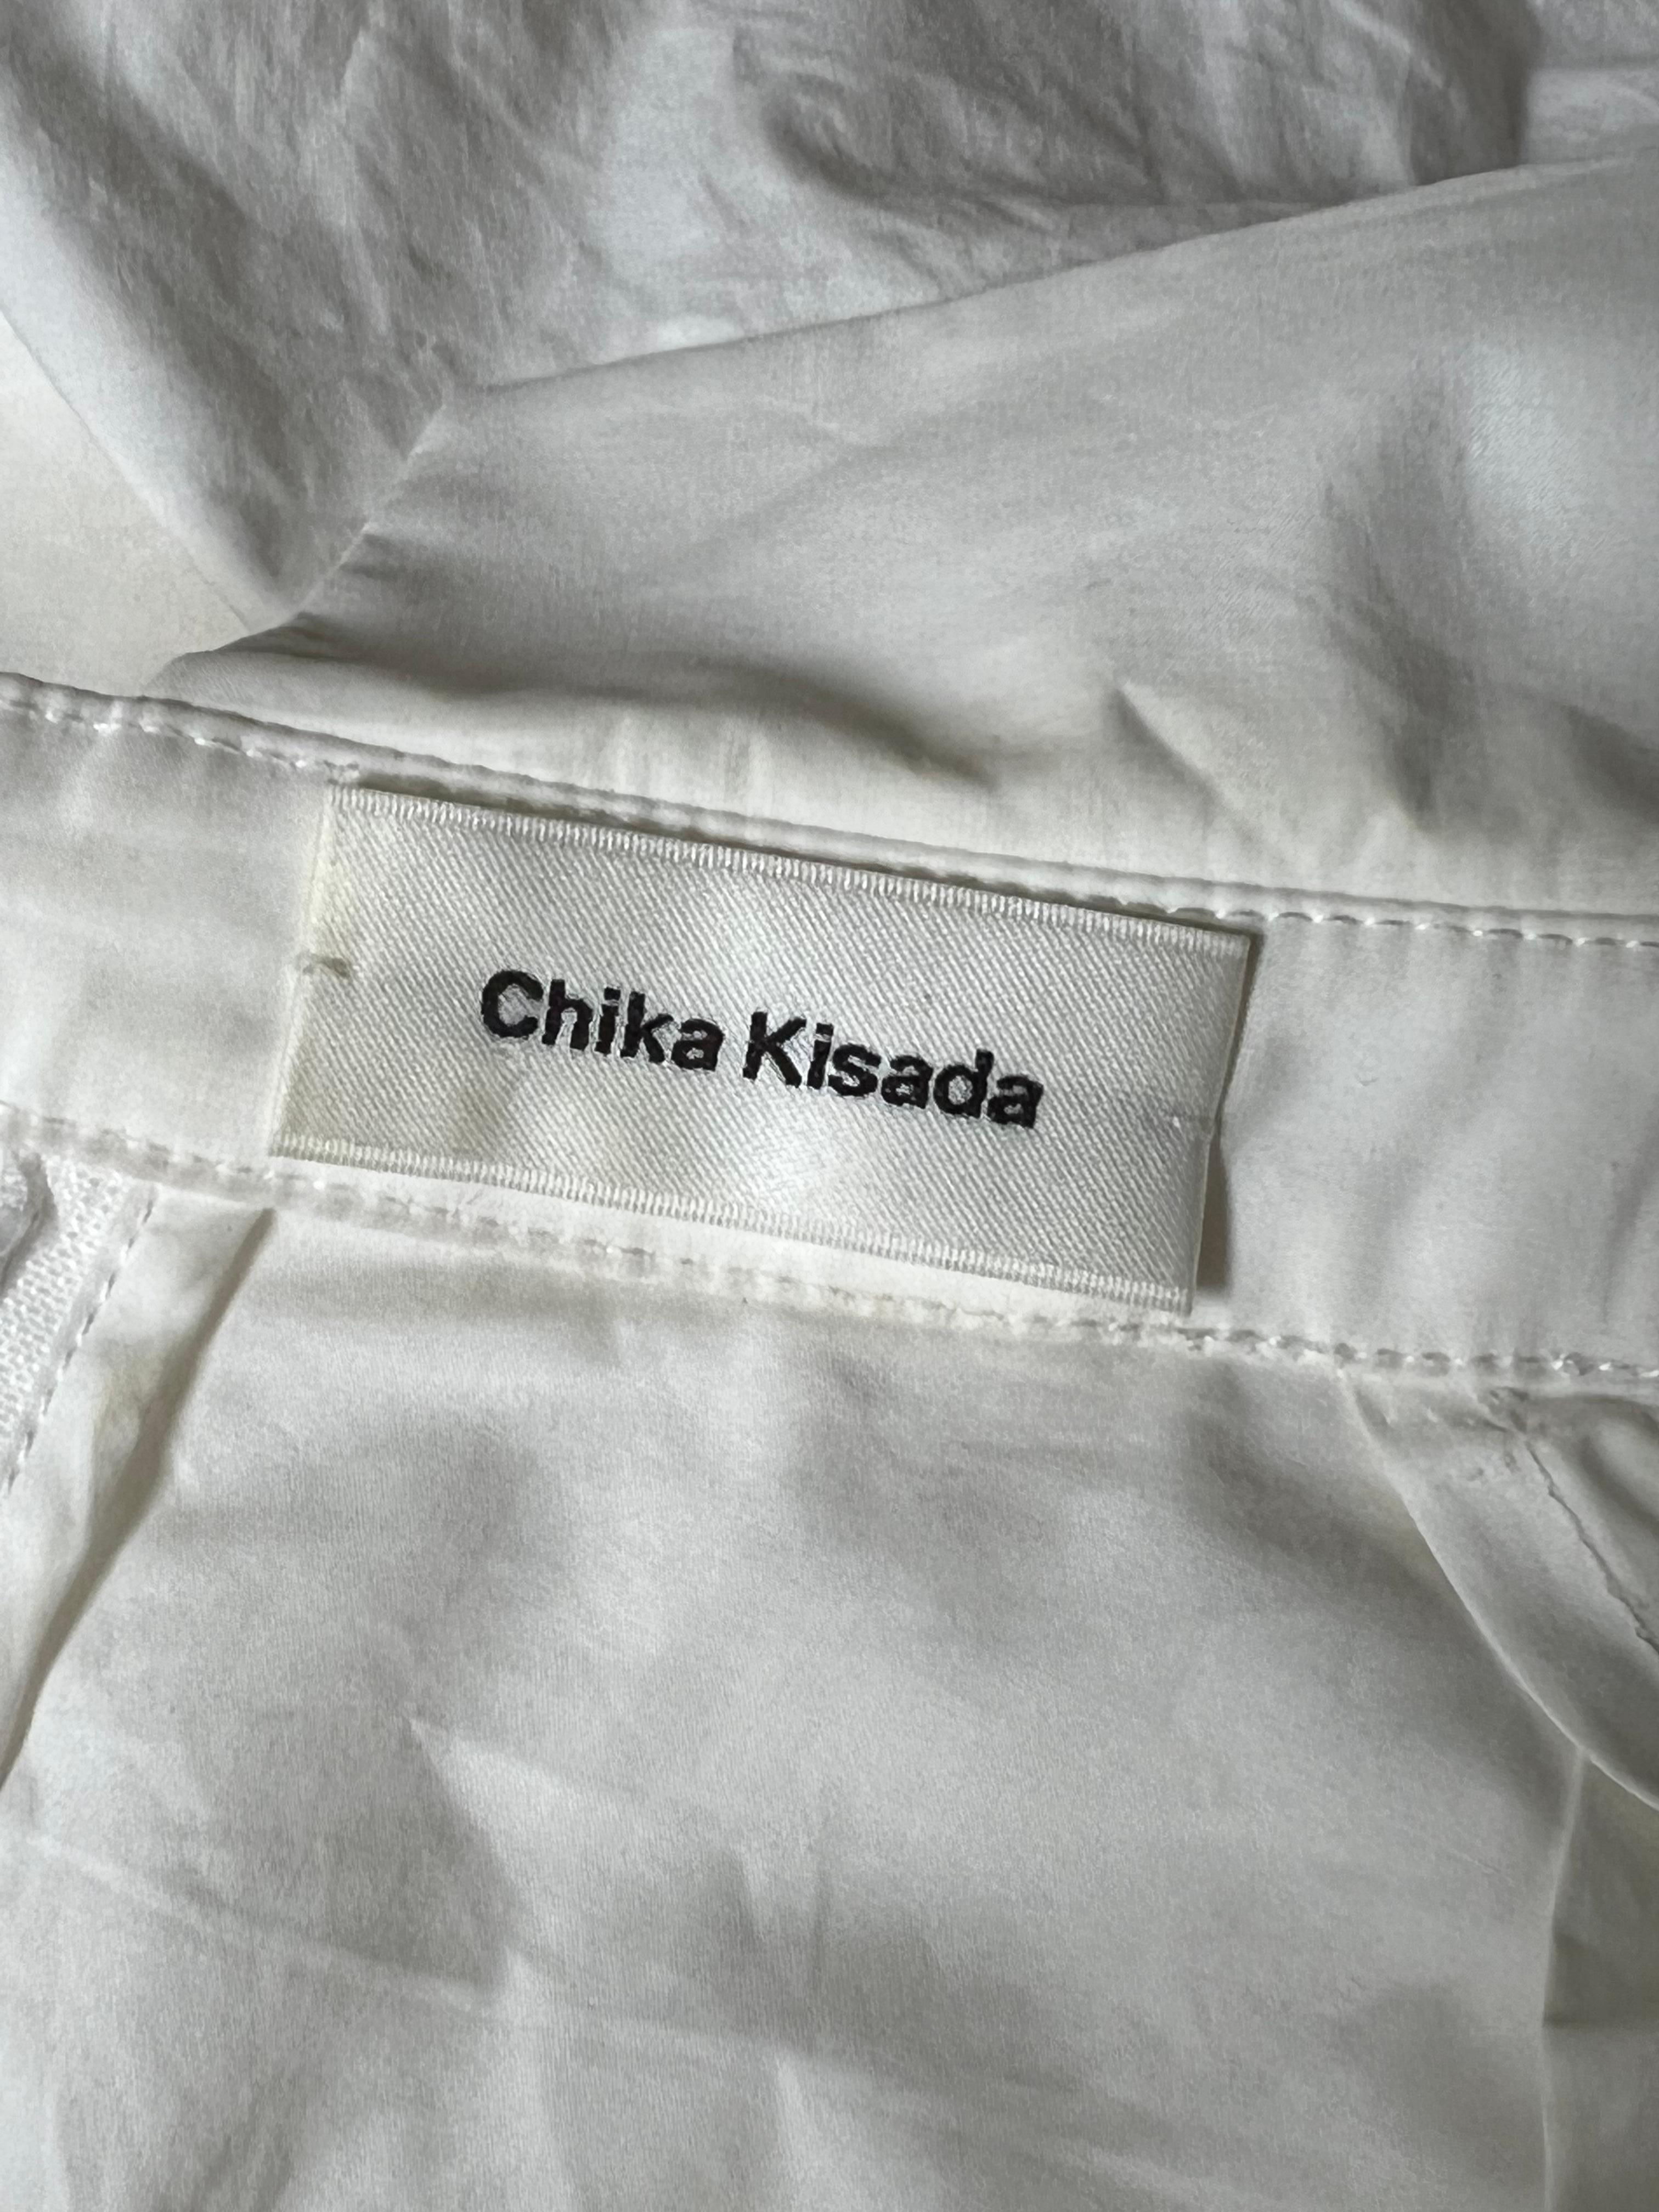 Chika Kisada White Cotton Blouse Top, Size 2 For Sale 3